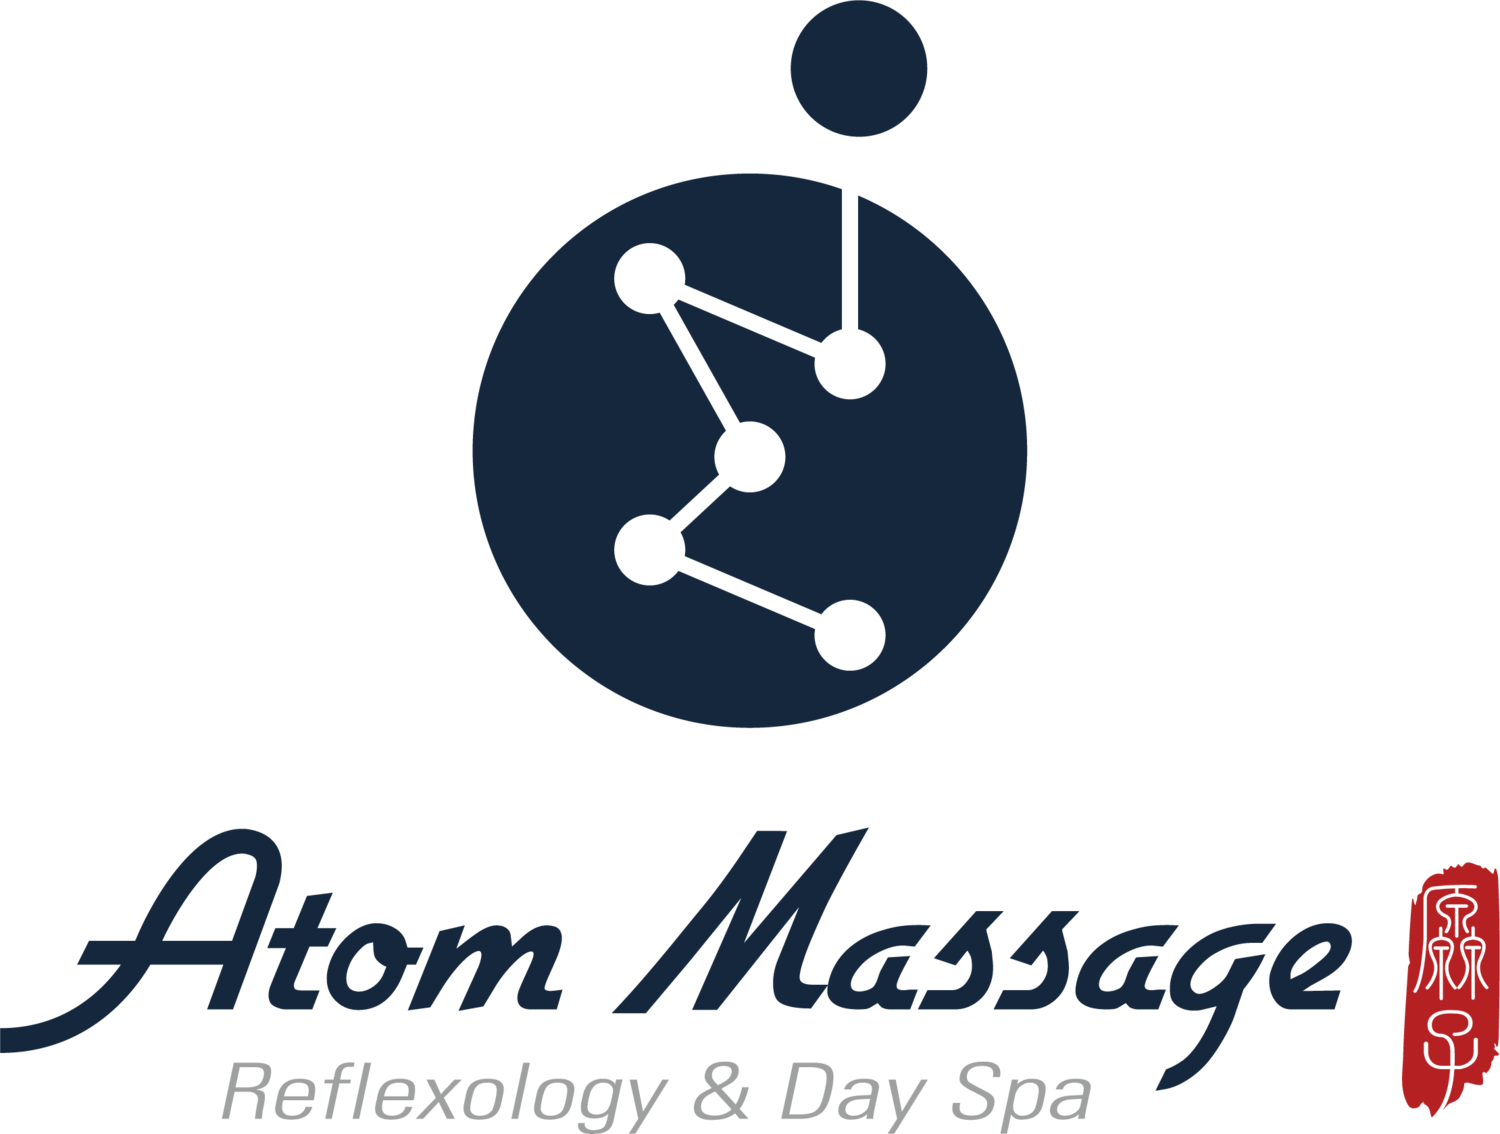 Atom Massage